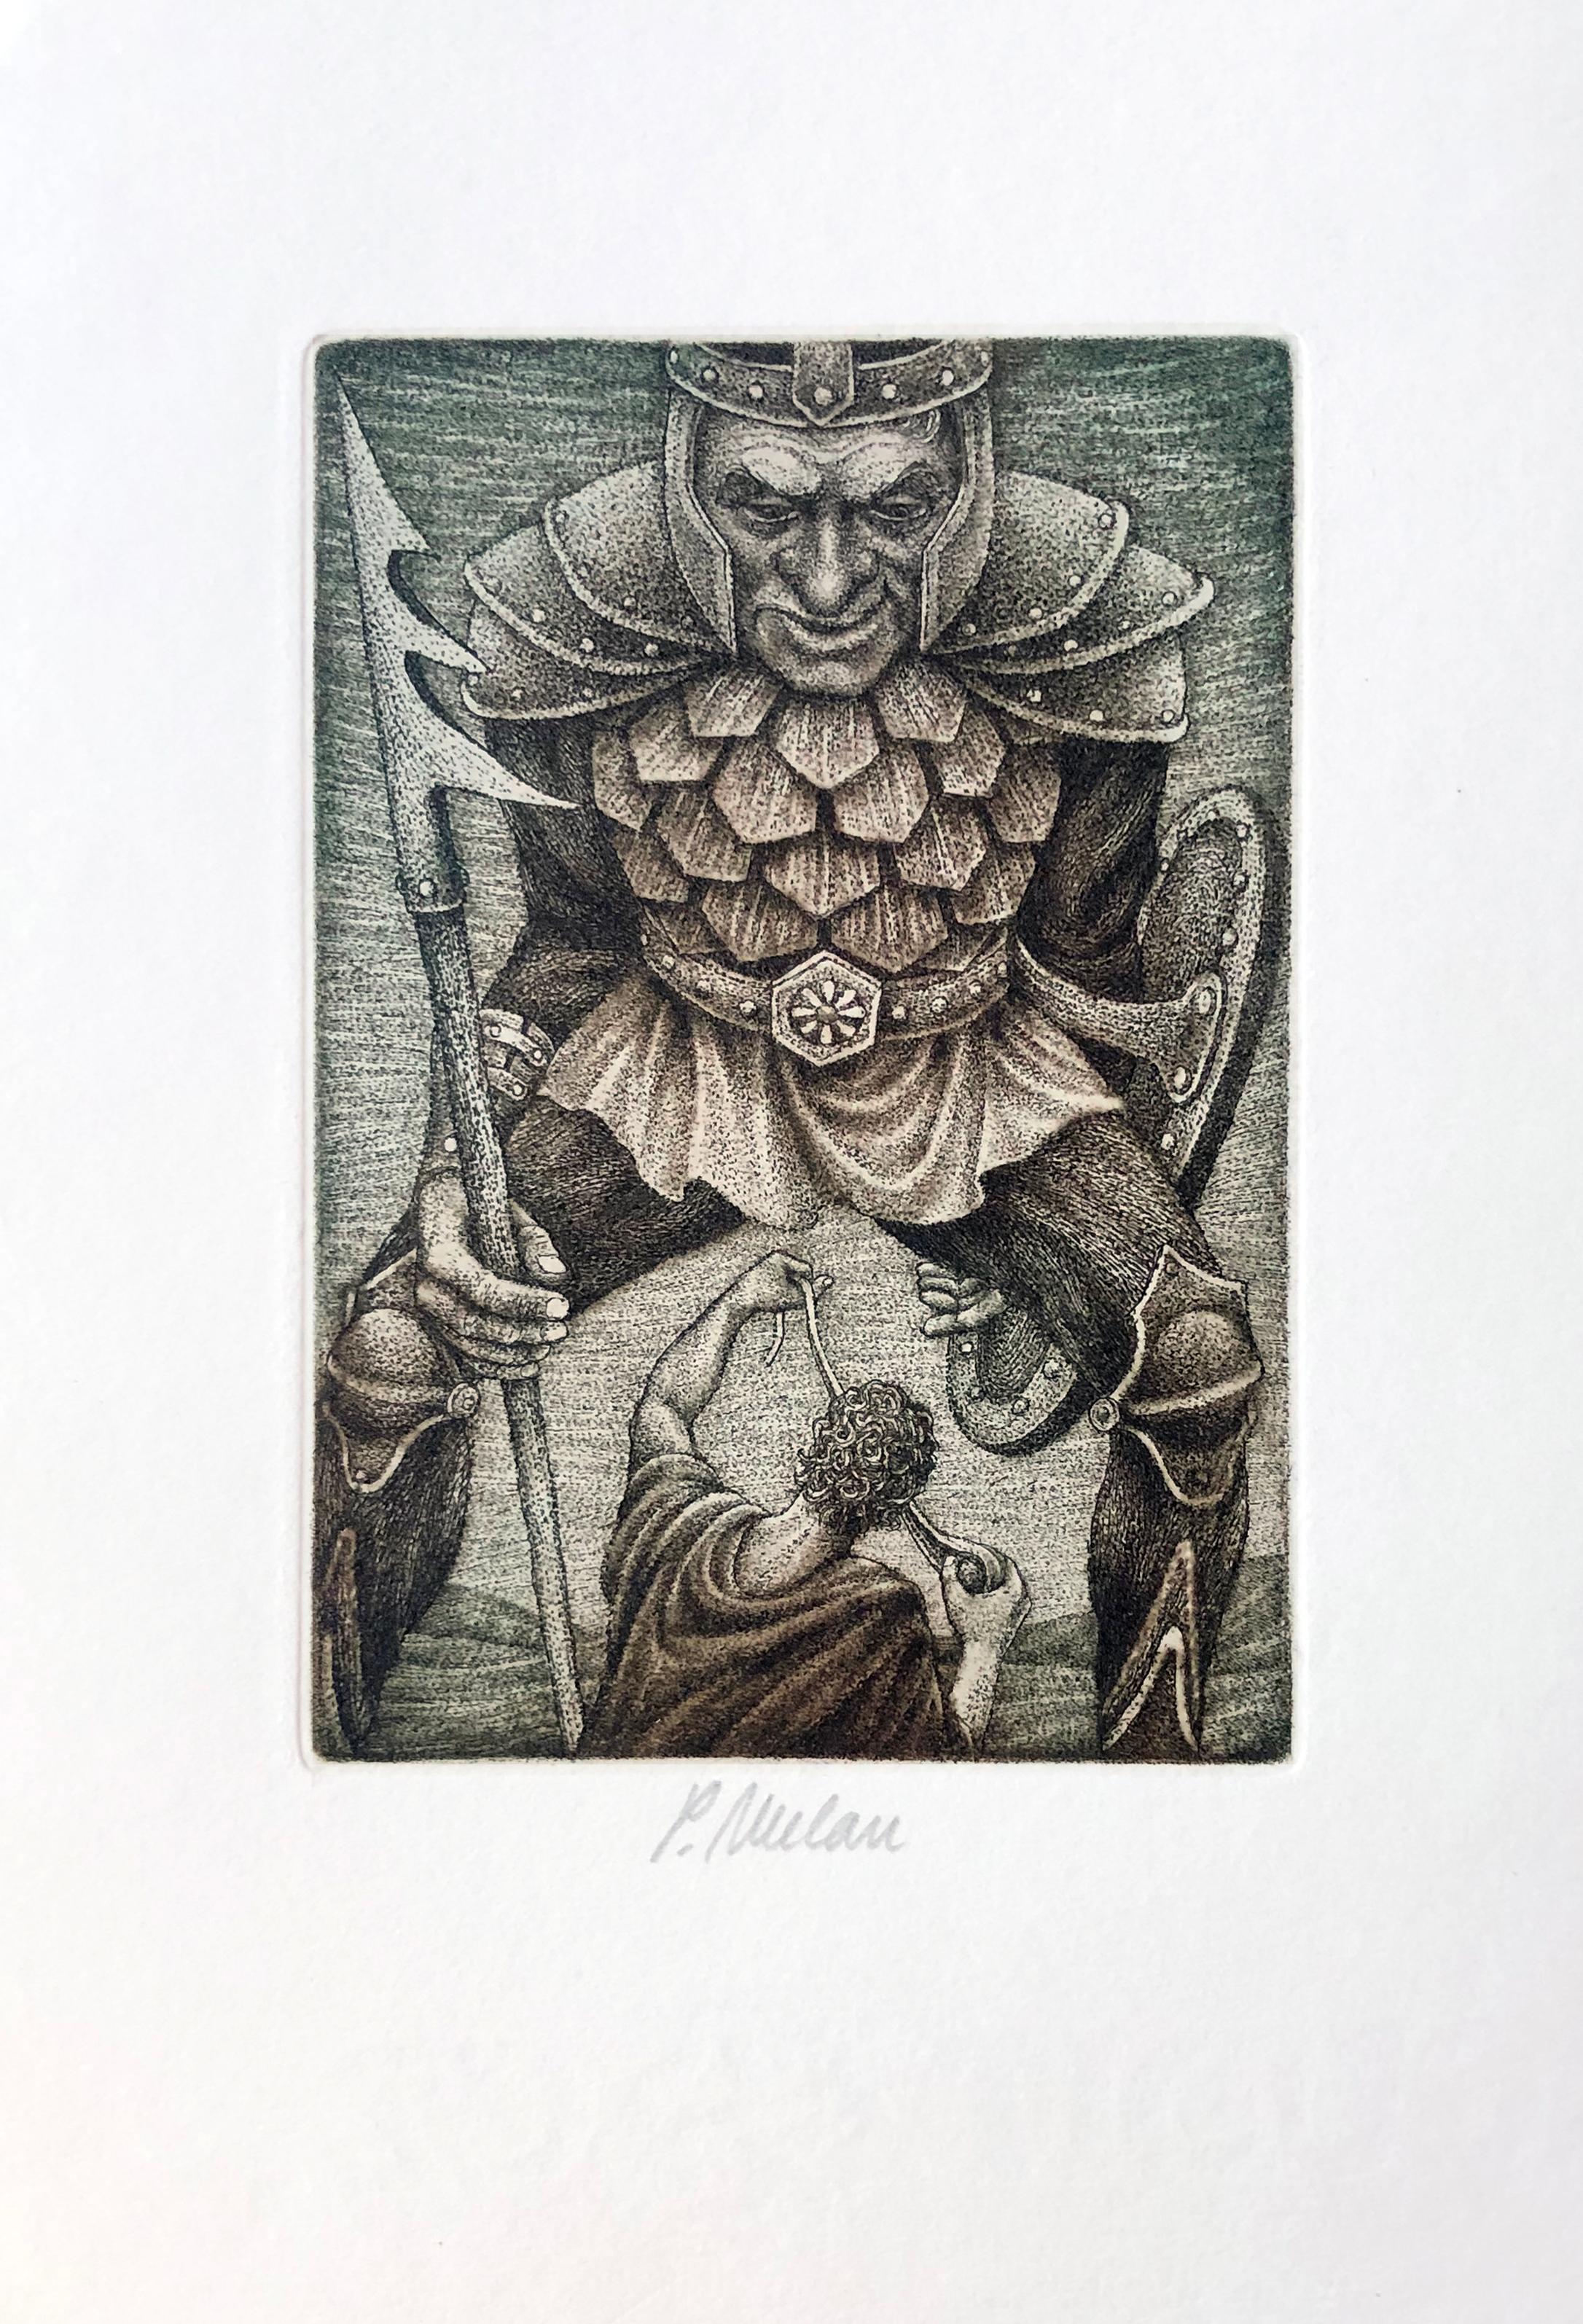 David and Goliath - Print by Petr Melan